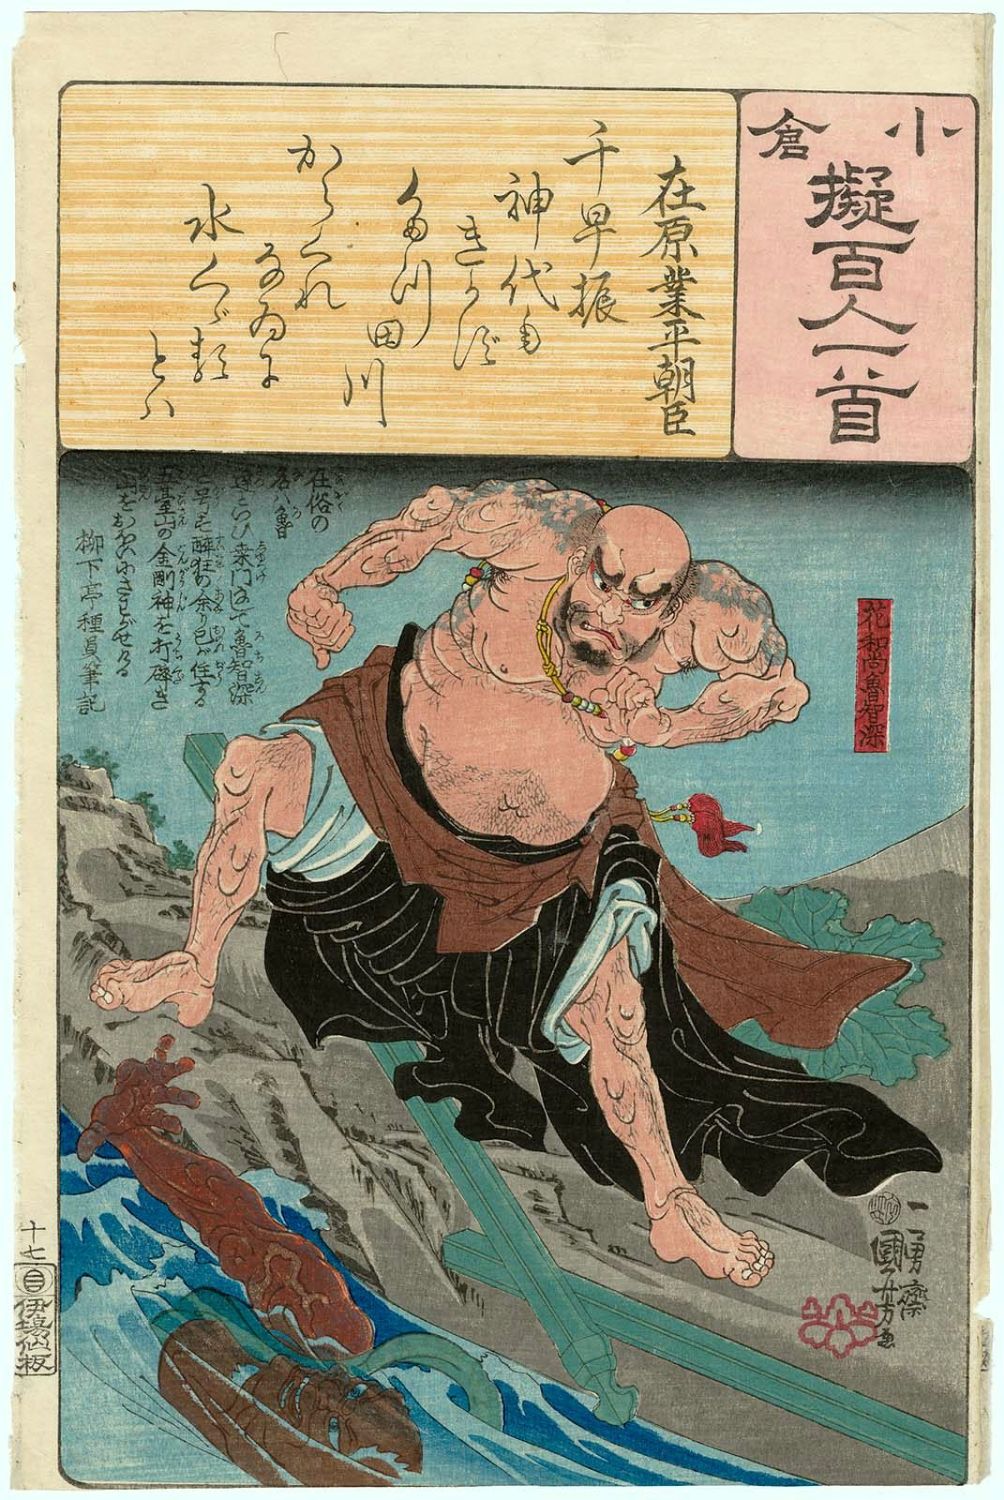 Utagawa Hiroshige: Usuyuki-hime 薄雪姫 (Princess Usuyuki) / Ogura 